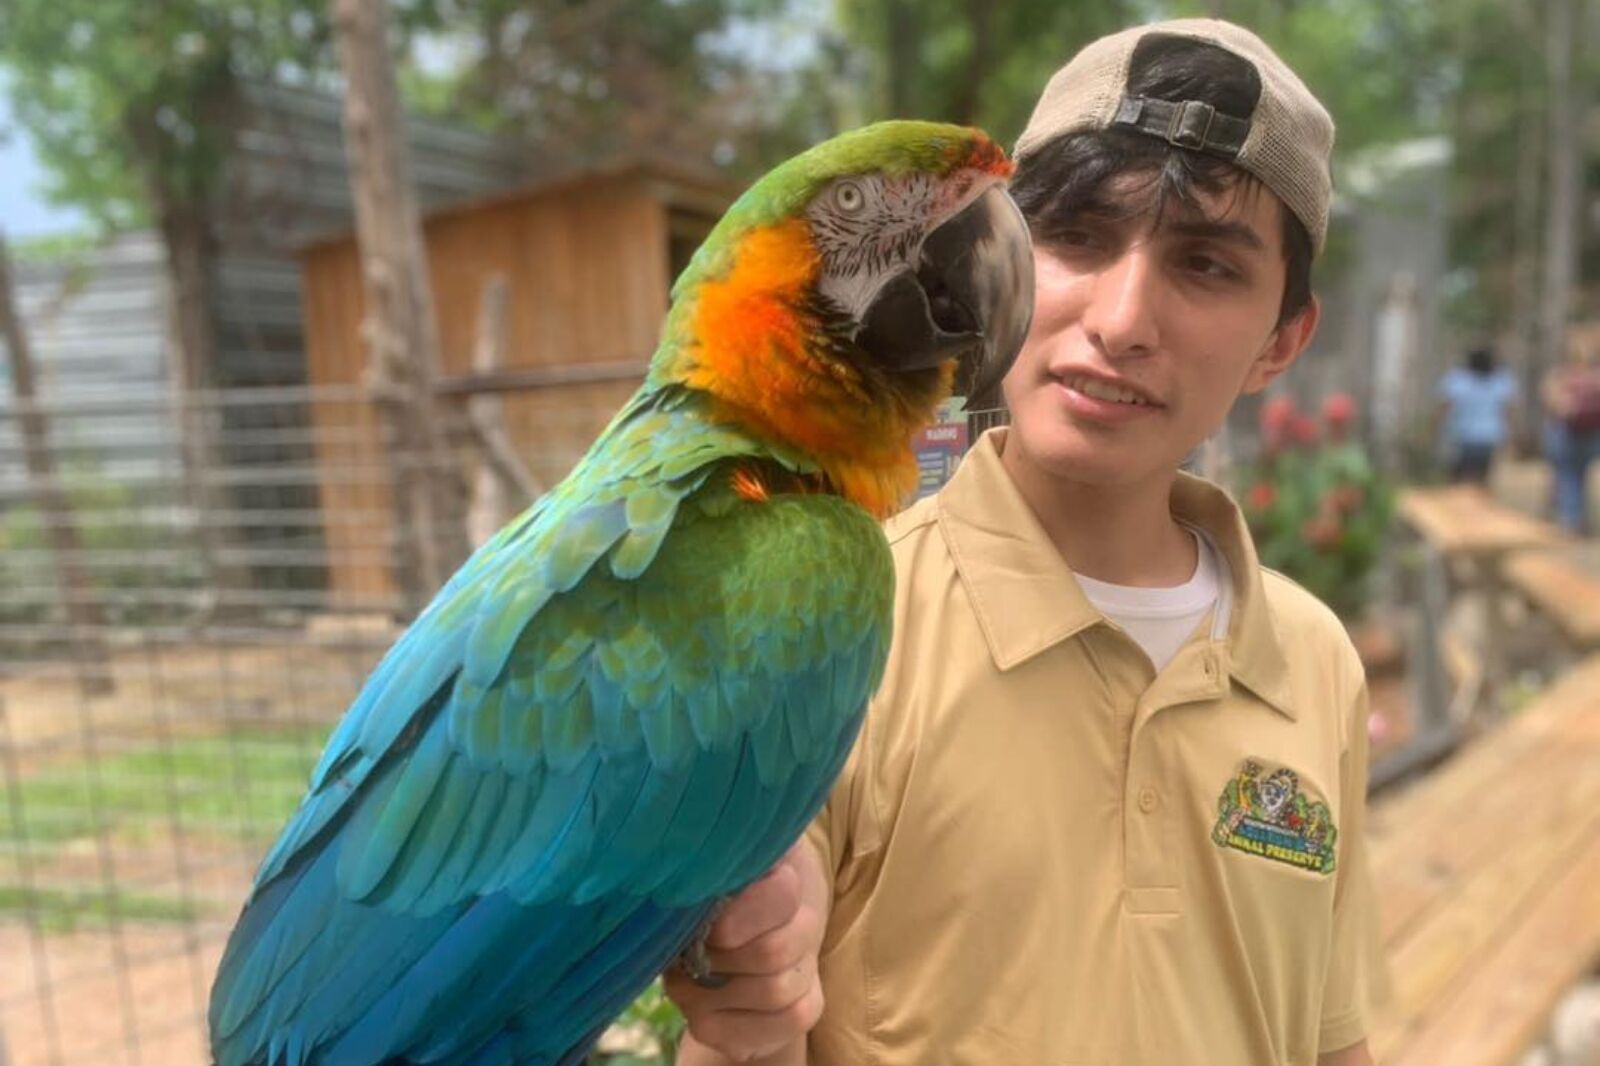 Man with bird at Houston Interactive Aquarium 